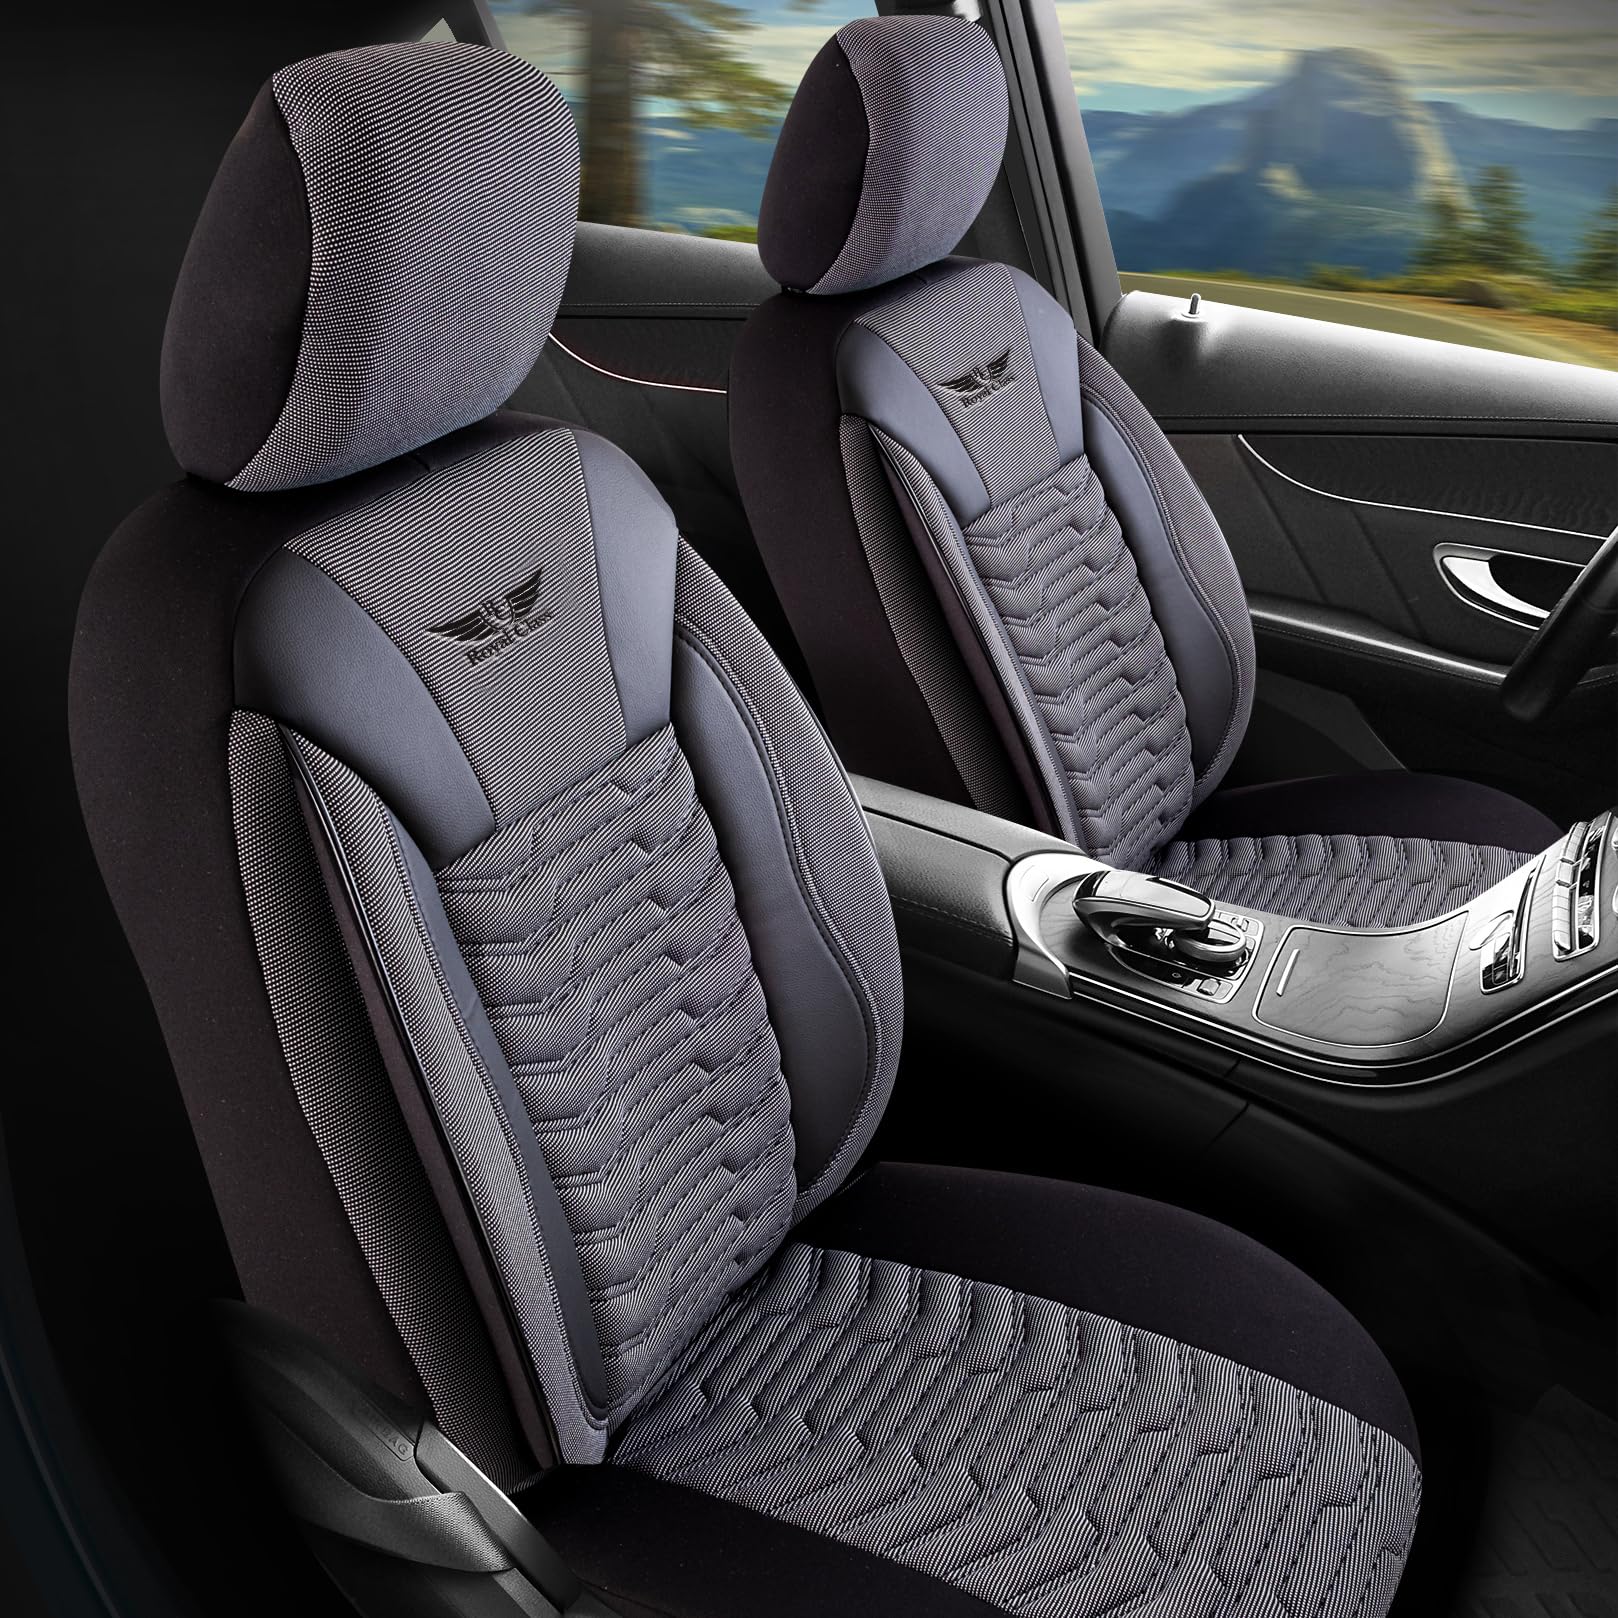 Royal Class Auto Sitzbezüge kompatibel für Suzuki Vitara in Dark Grau Komplett Fahrer und Beifahrer mit Rücksitzbank, Autositzbezug Schonbezug Sitzbezug Komplettset 5-Sitze Kunstleder von RC Royal Class